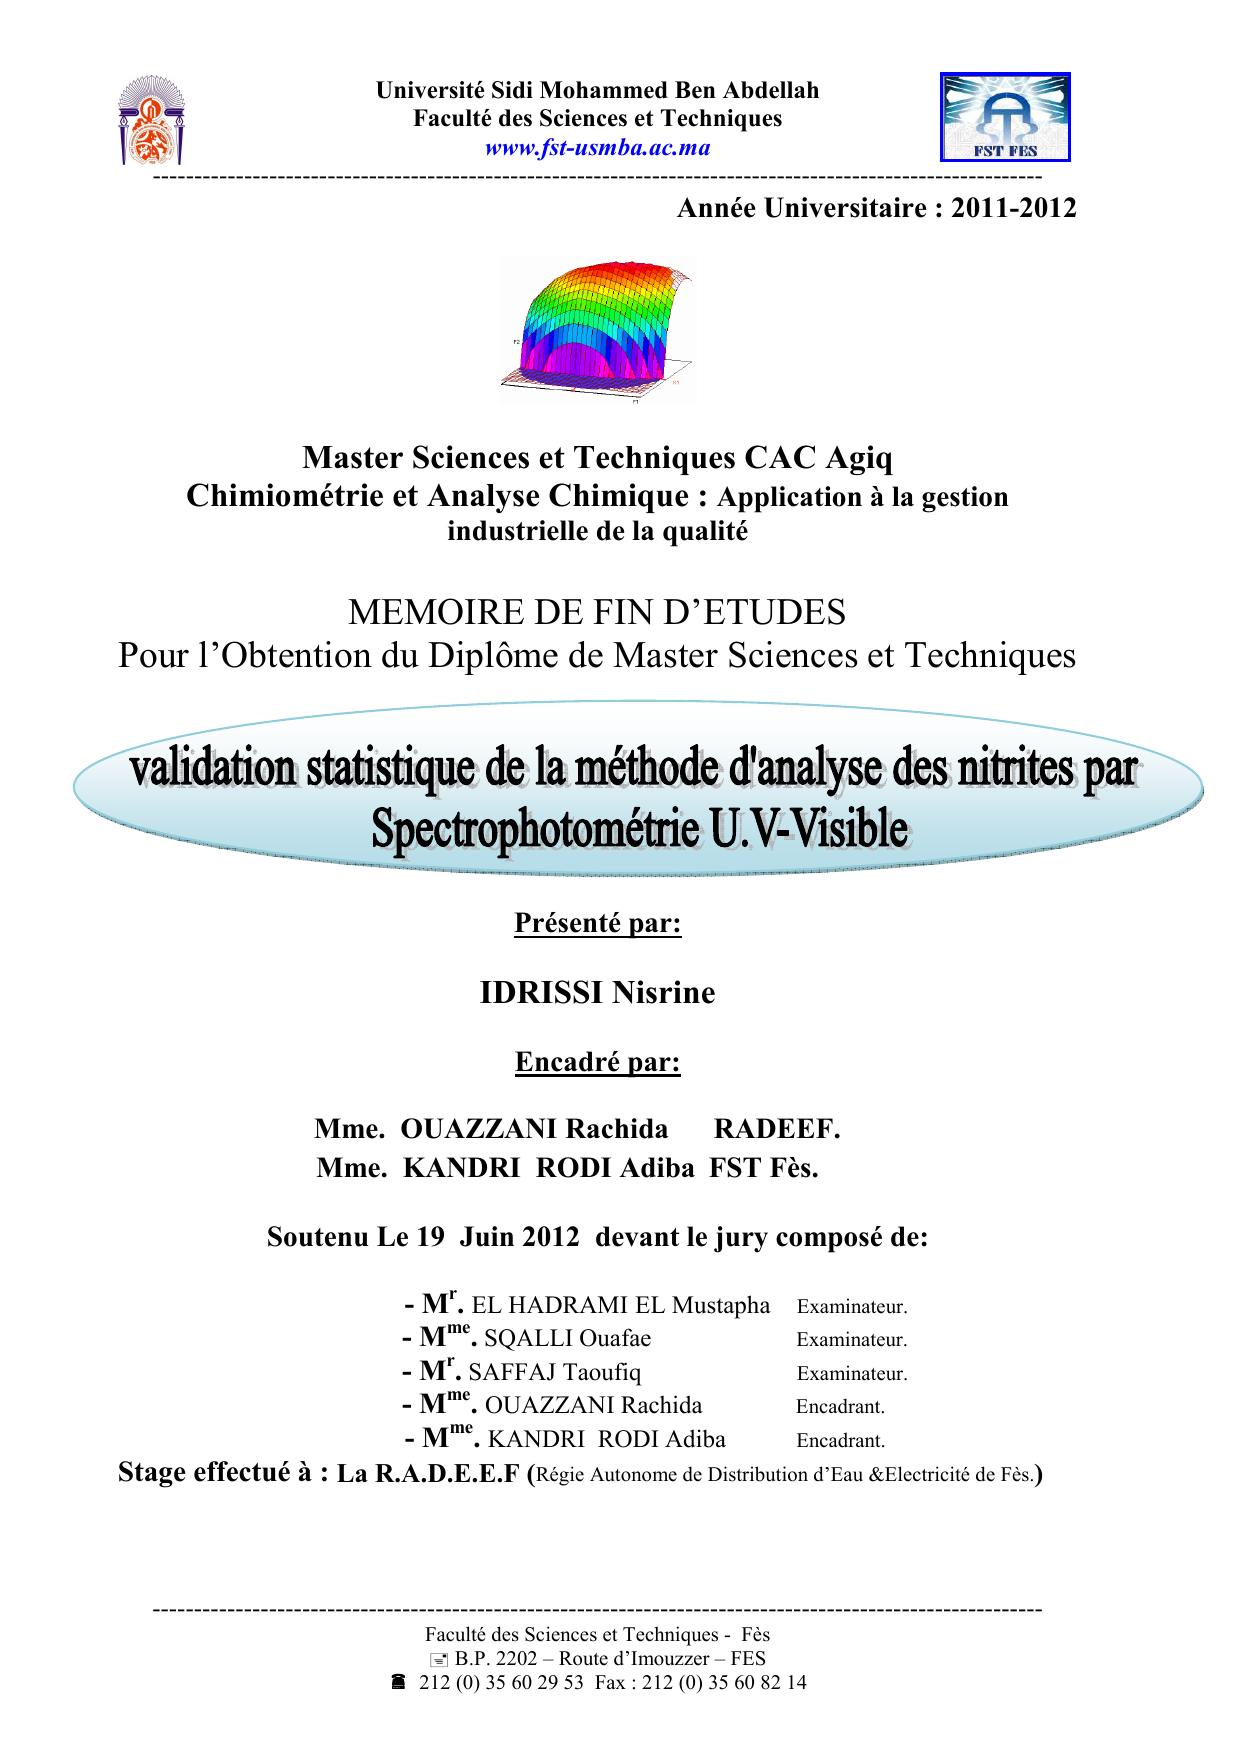 Validation statistique de la méthode d'analyse des nitrites par Spectrophotométrie U.V-Visible